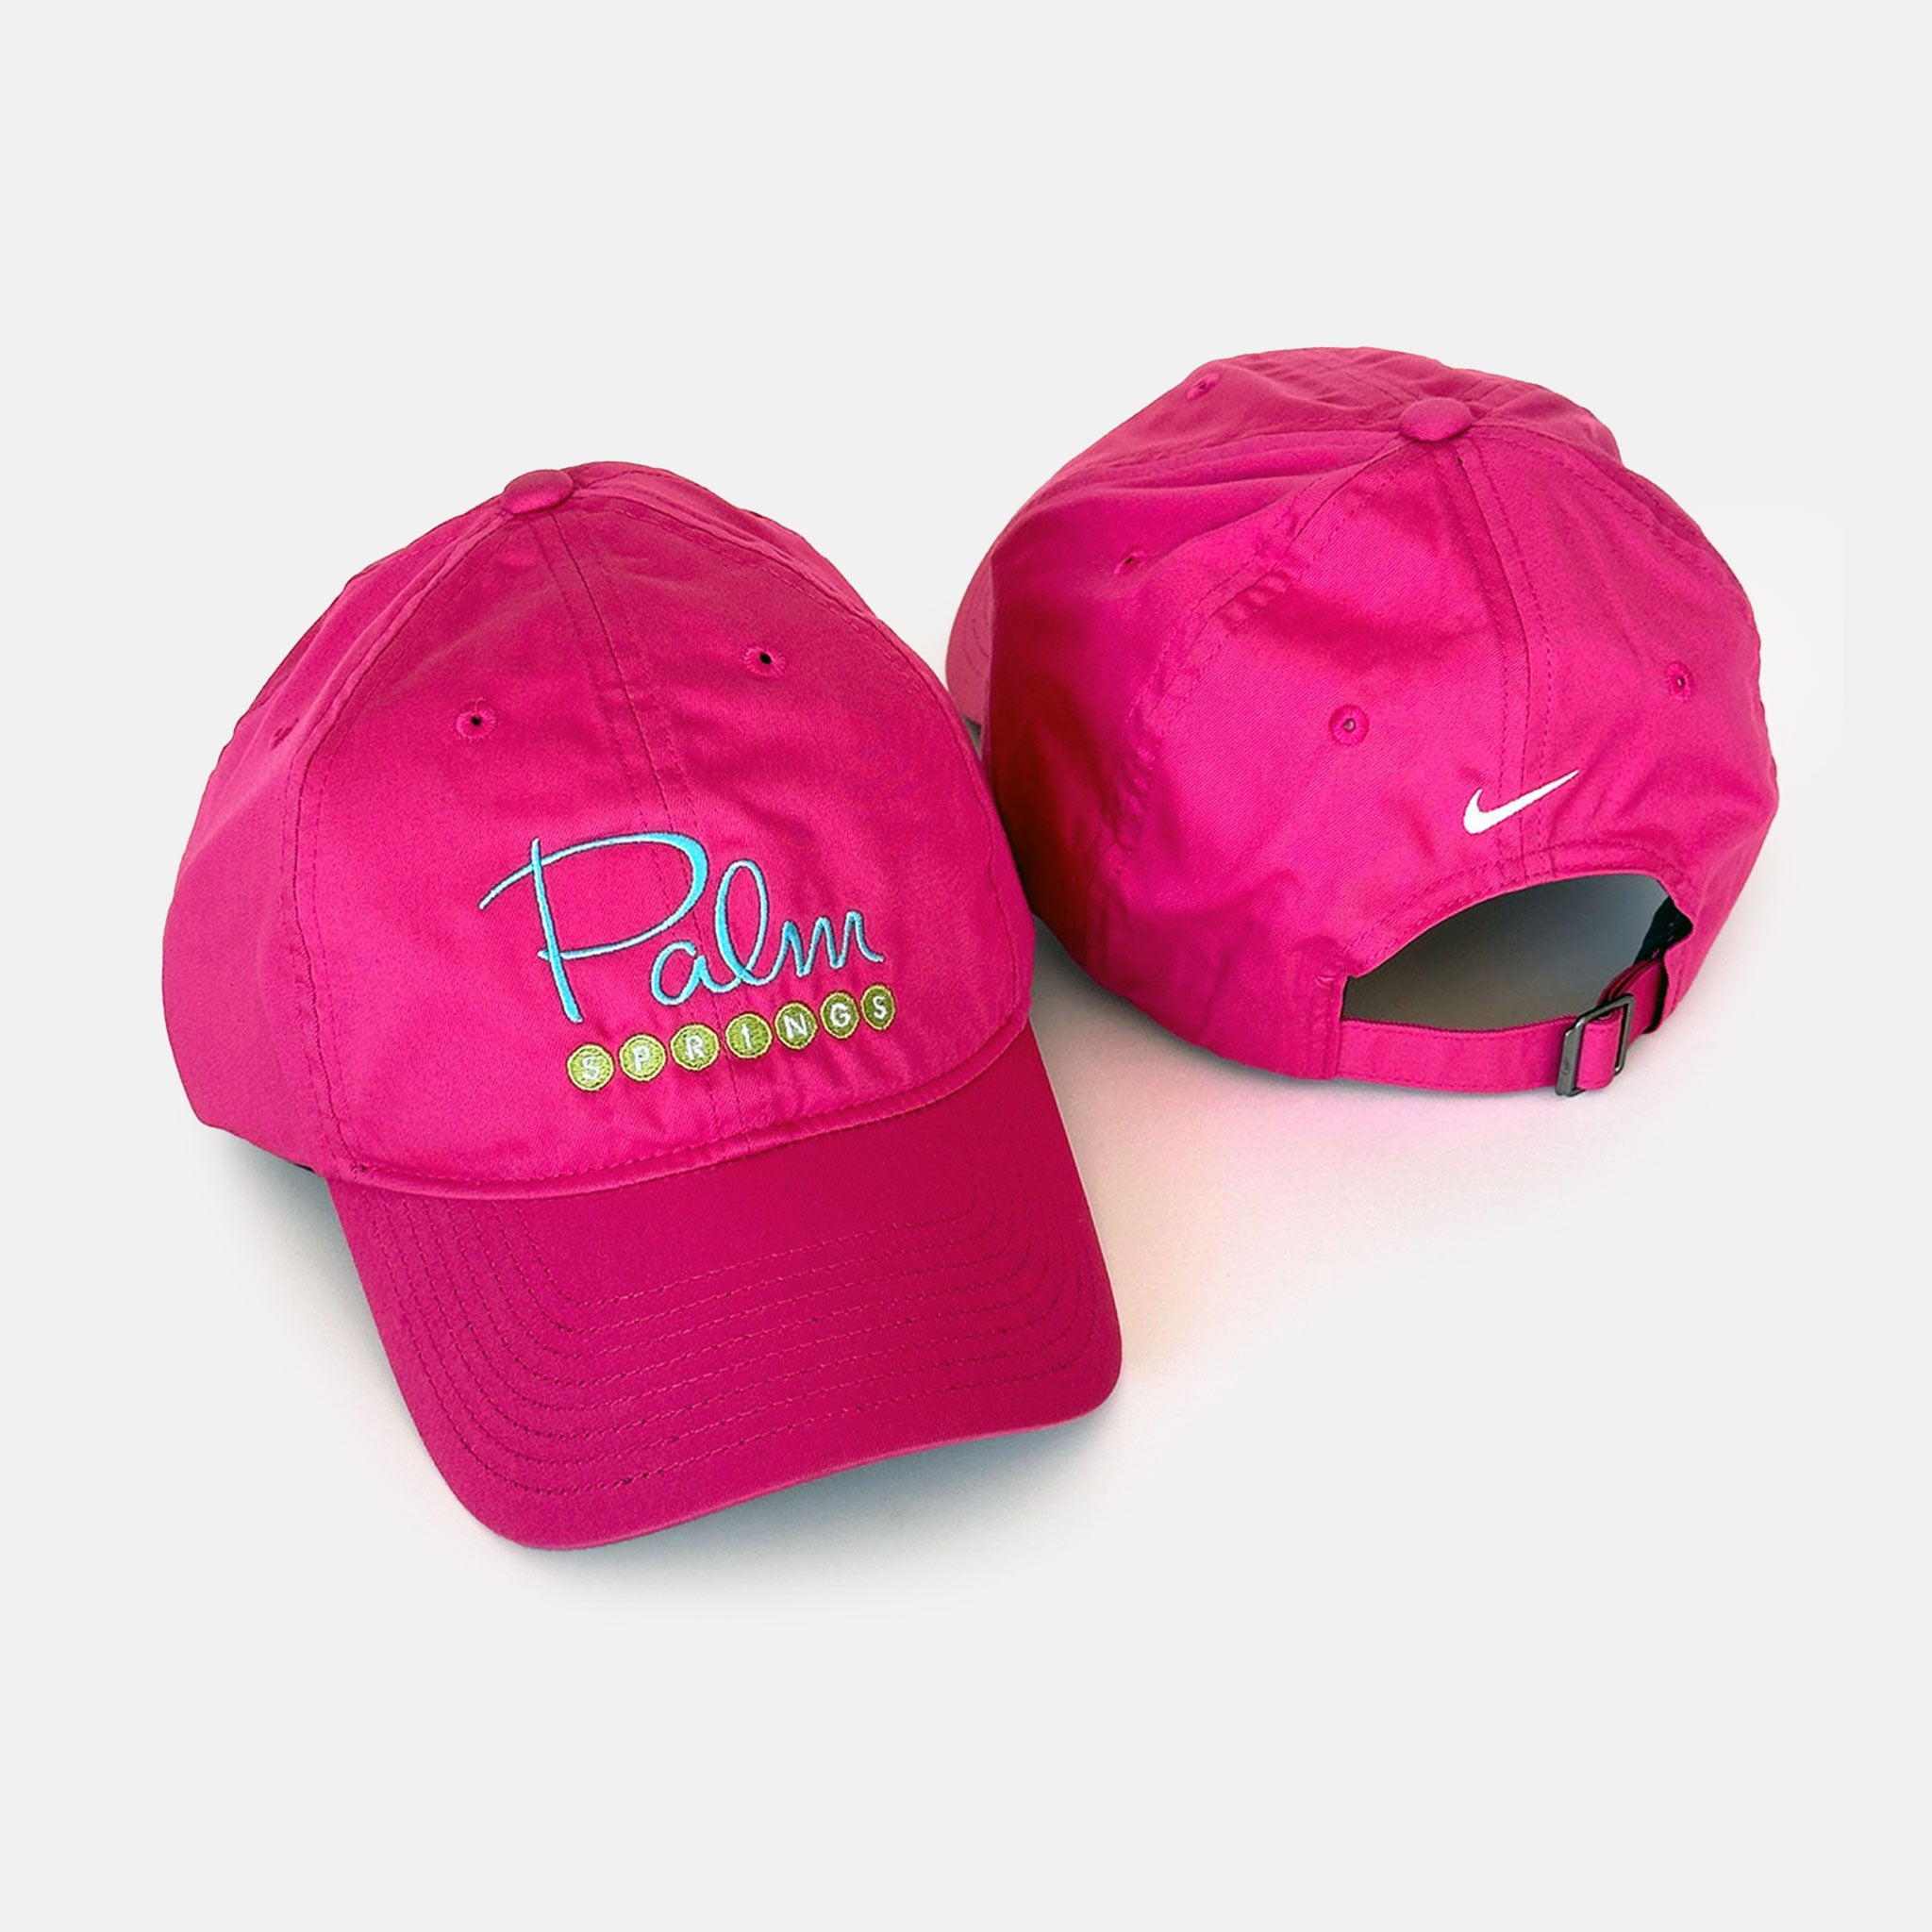 Palm Springs Nike Baseball Golf Cap - Fuchsia